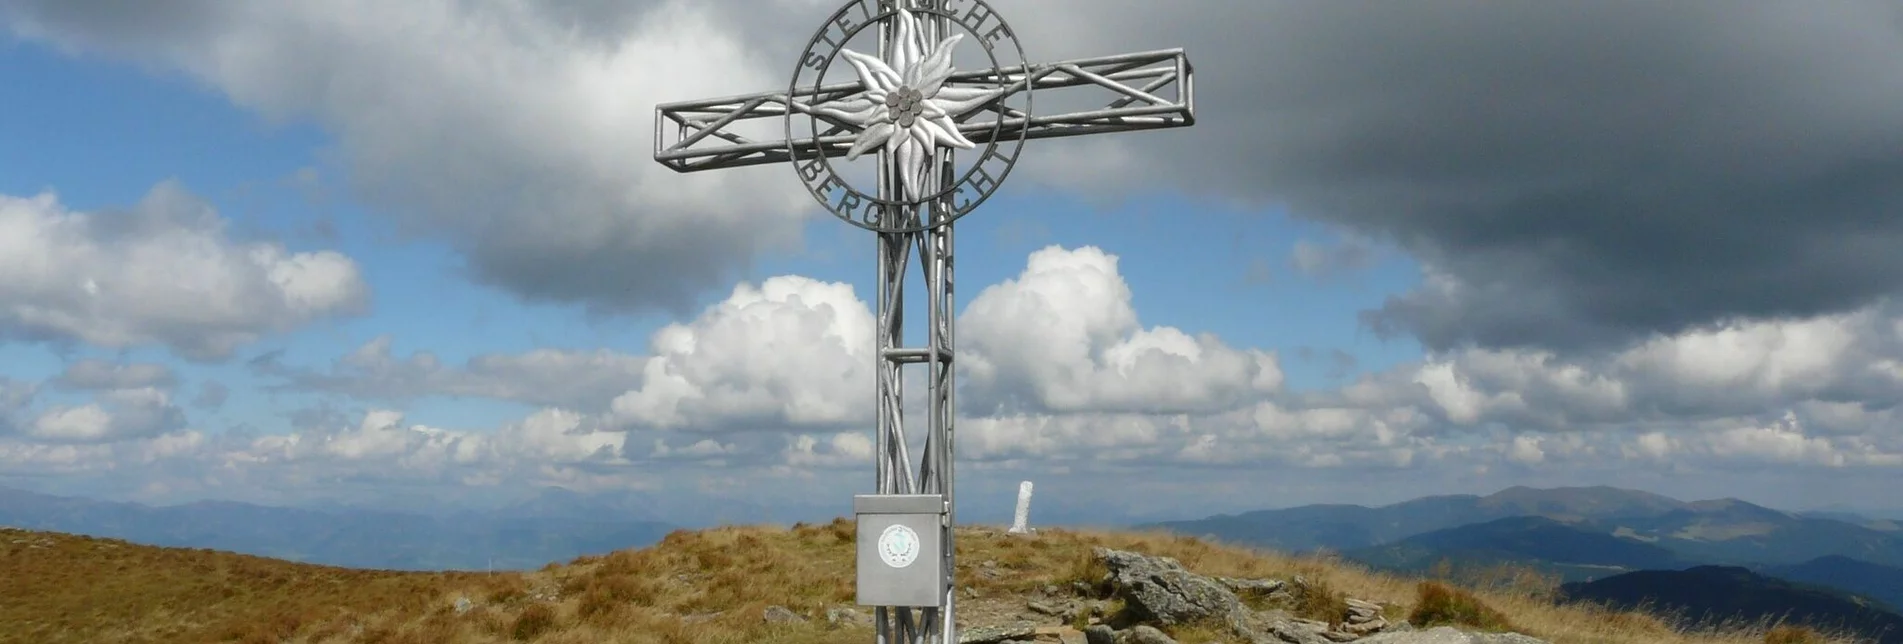 Gipfelkreuz Rappoldkogel | © Erlebnisregion Murtal